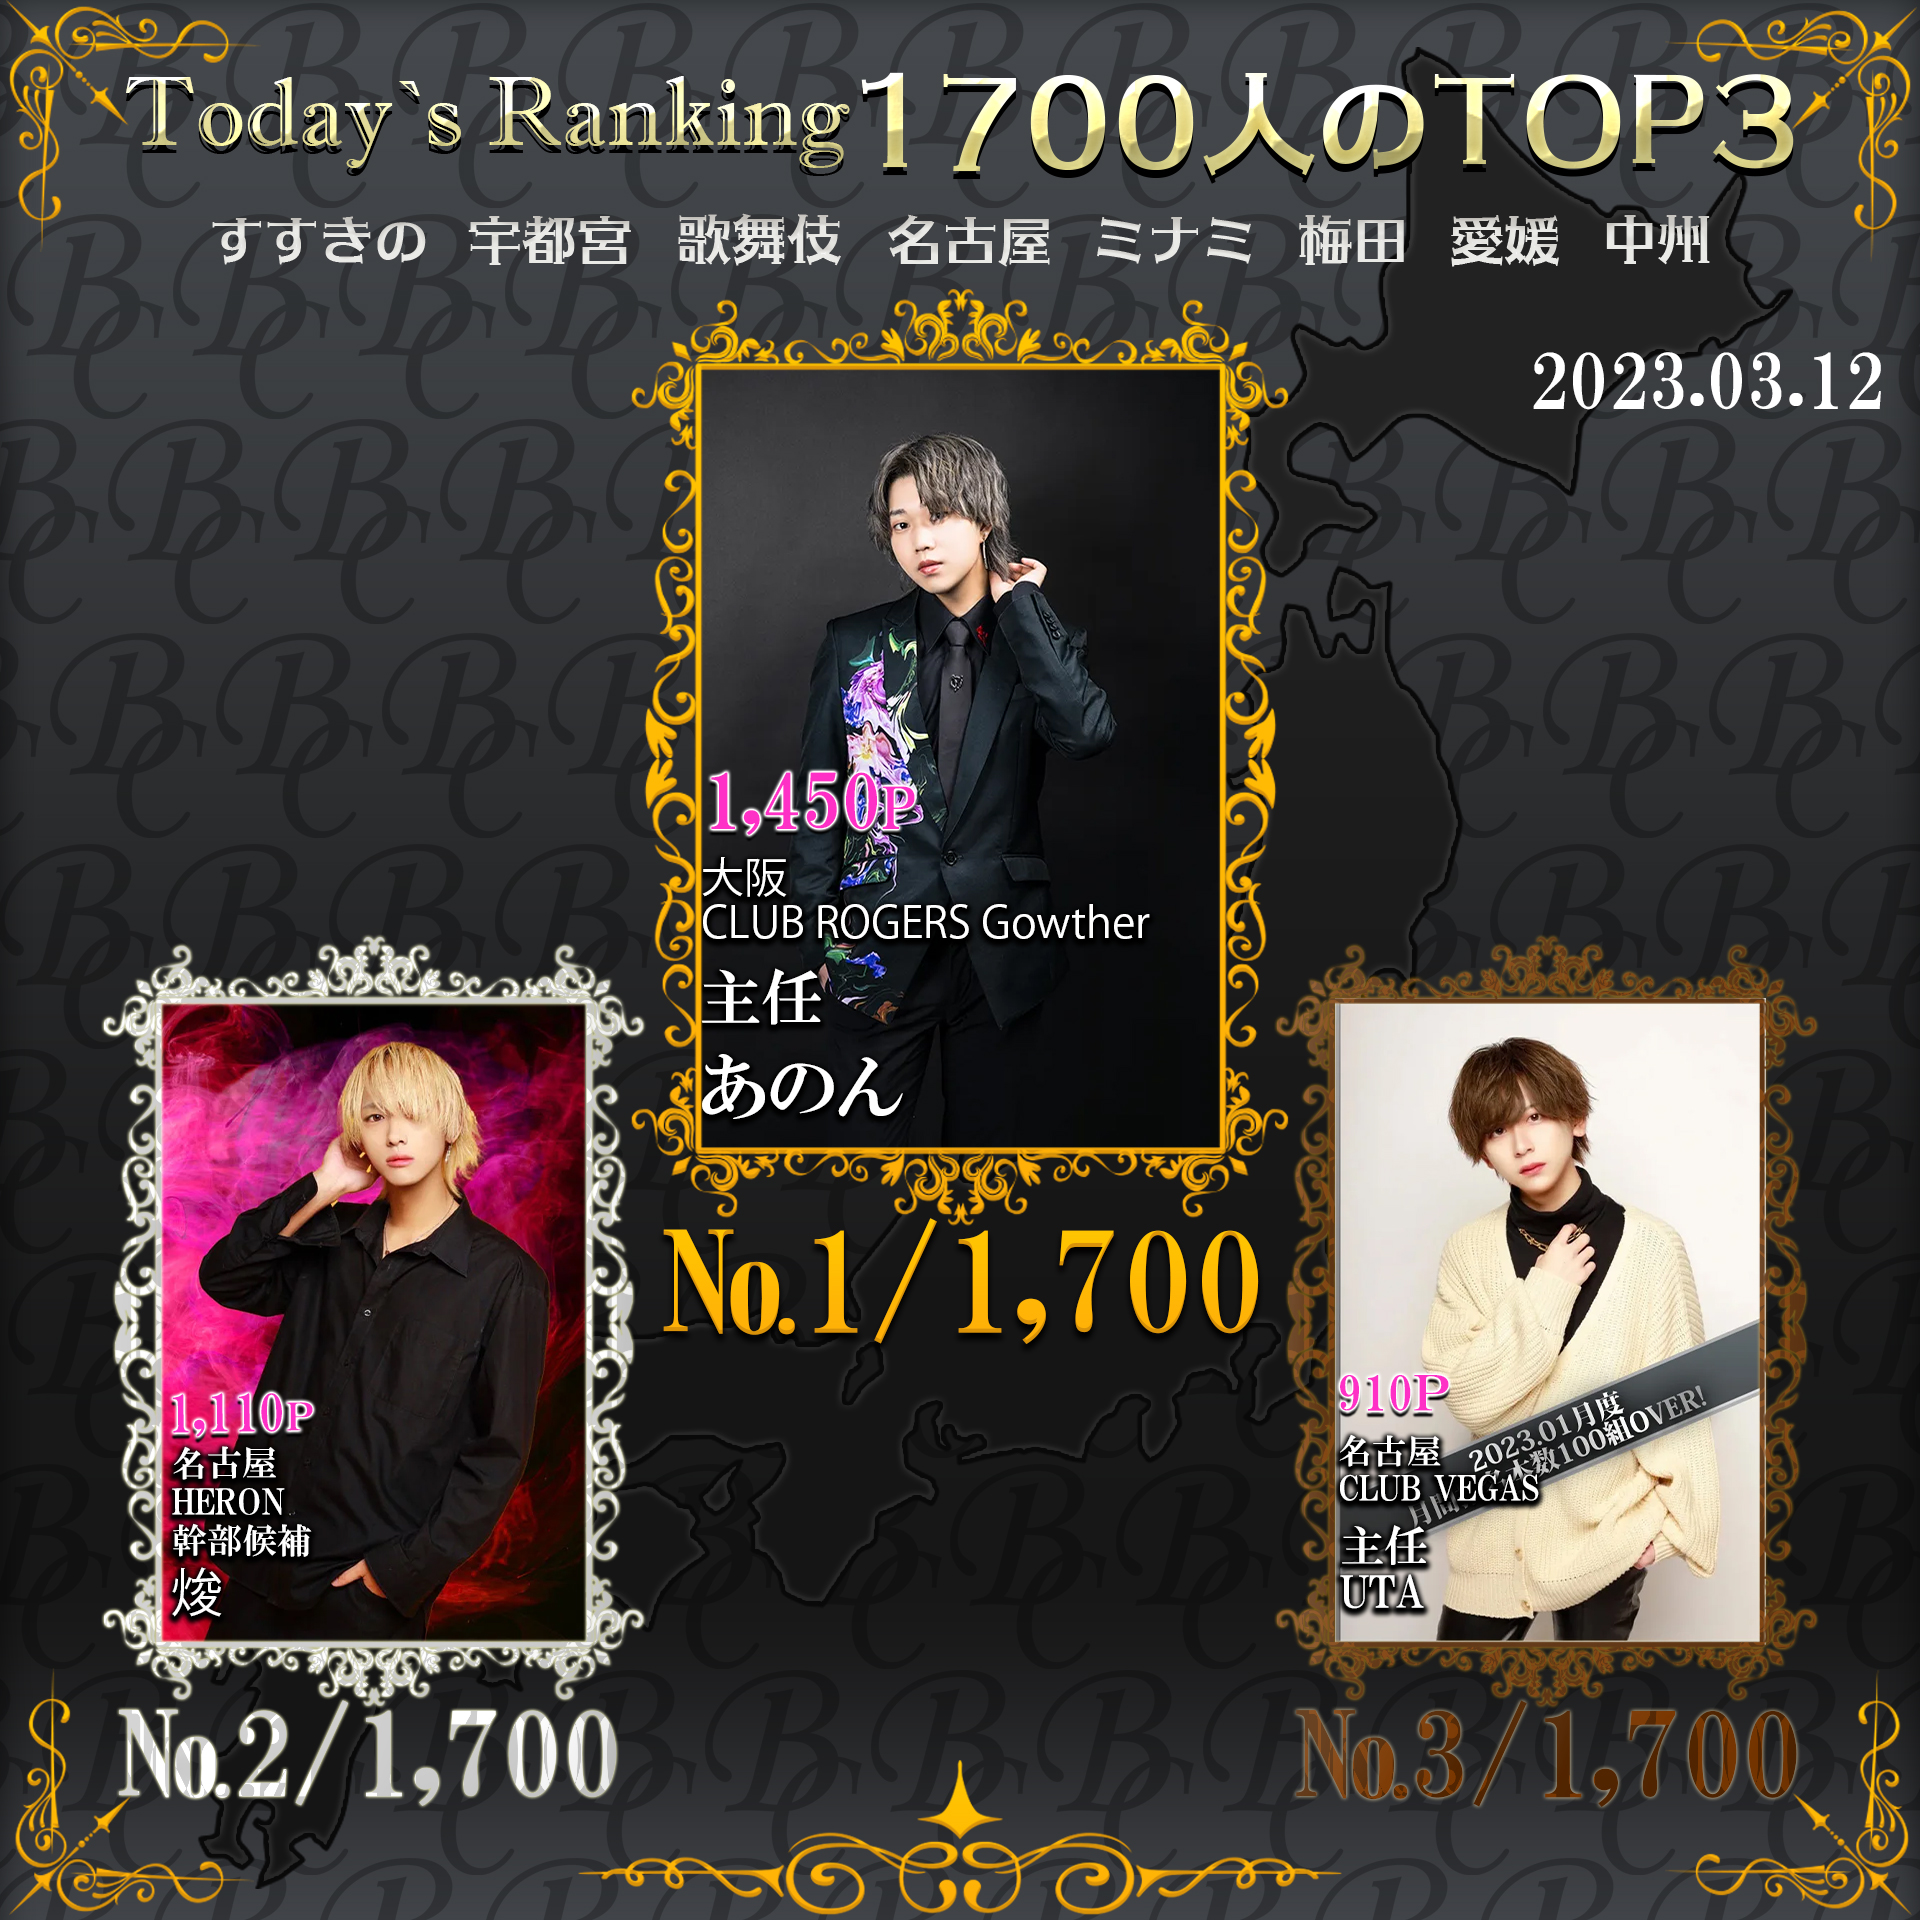 3/12 Today‘s Ranking